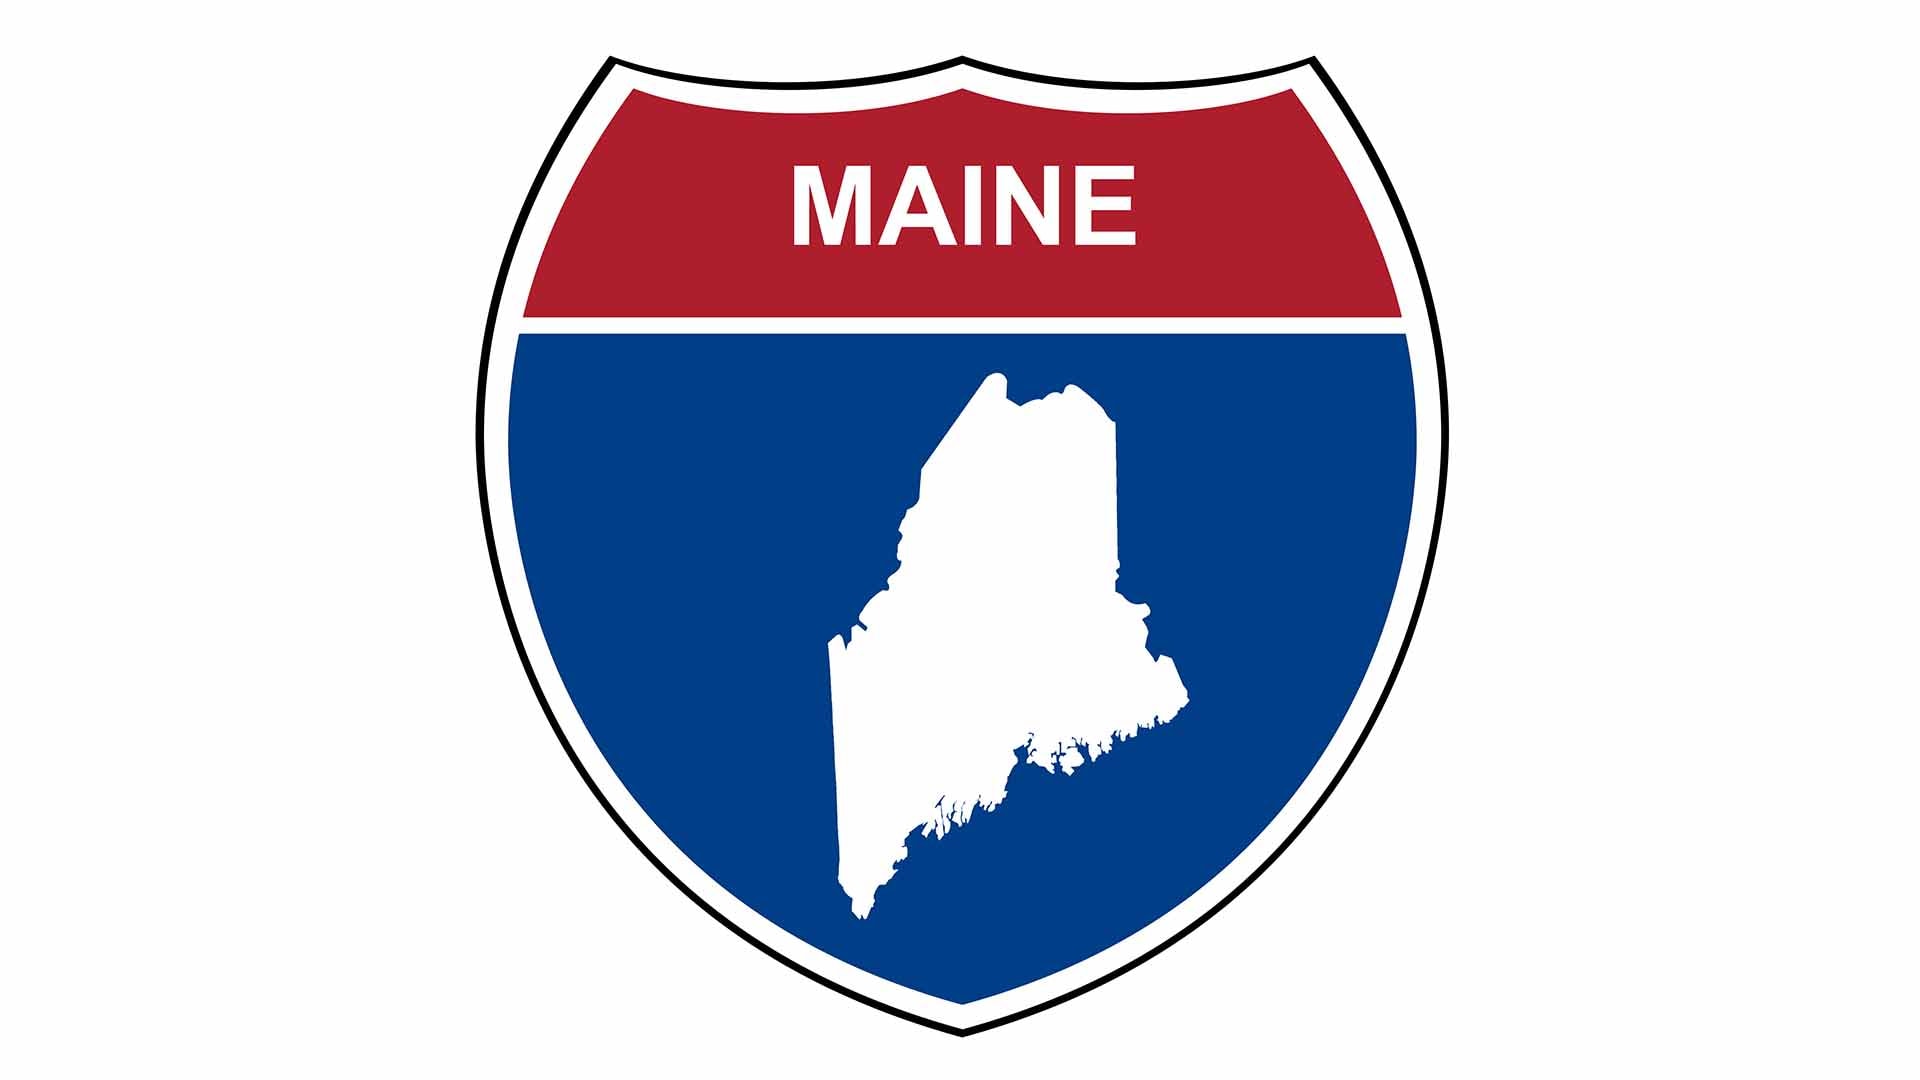 Maine state roadside sign